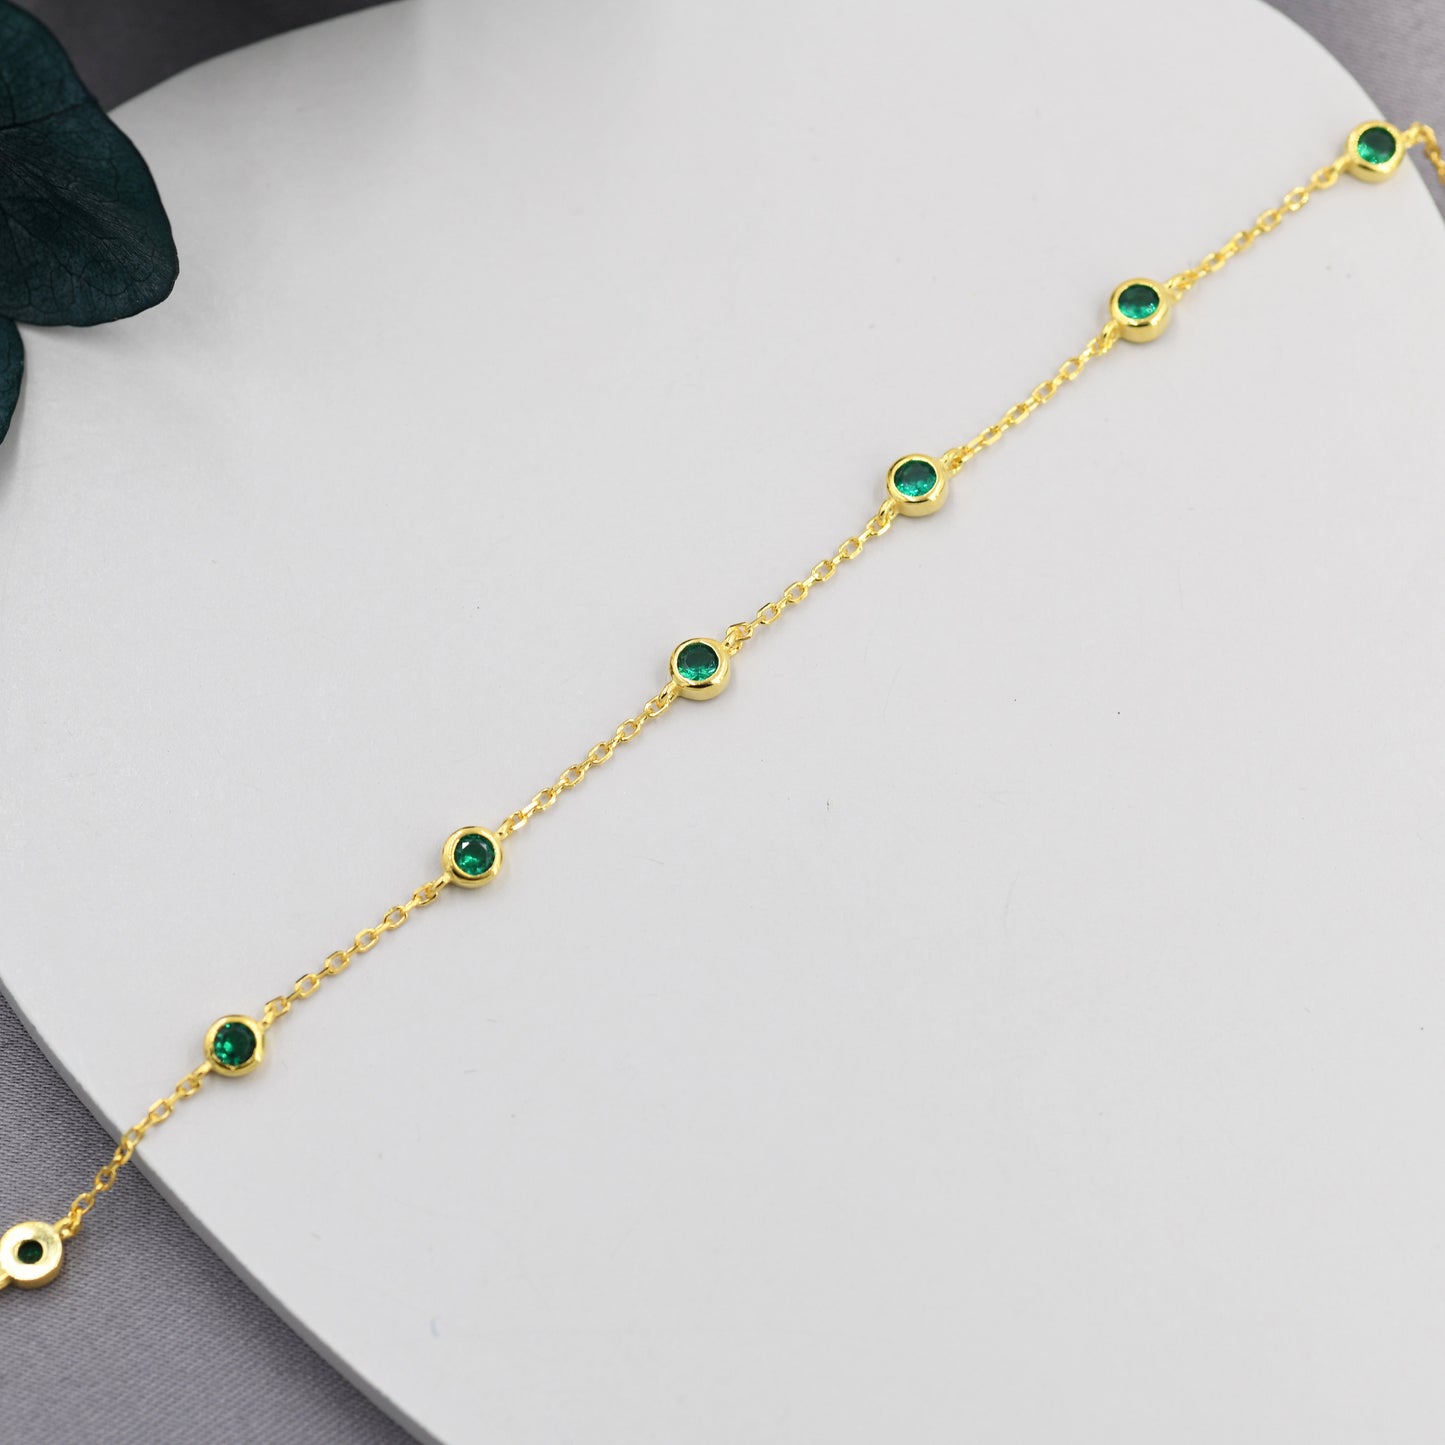 Emerald Green CZ Floating Bracelet or Anklet in Sterling Silver, Silver or Gold, Satellite Crystal Bracelet or Anklet, Solid Silver Bracelet